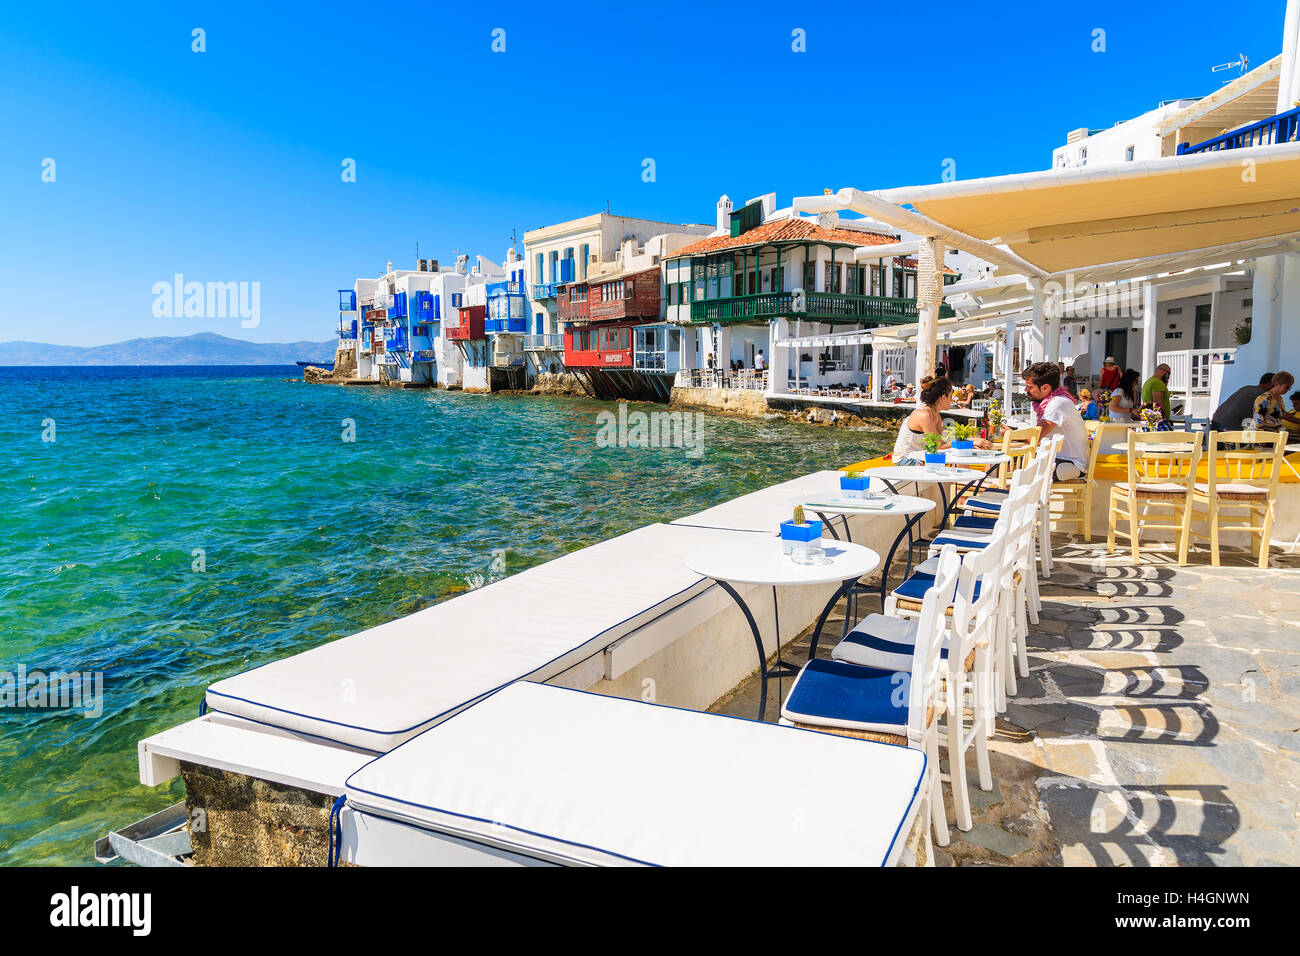 LITTLE VENICE, MYKONOS ISLAND - MAY 16, 2016: people dining in typical Greek tavern in Little Venice part of Mykonos town, Mykon Stock Photo